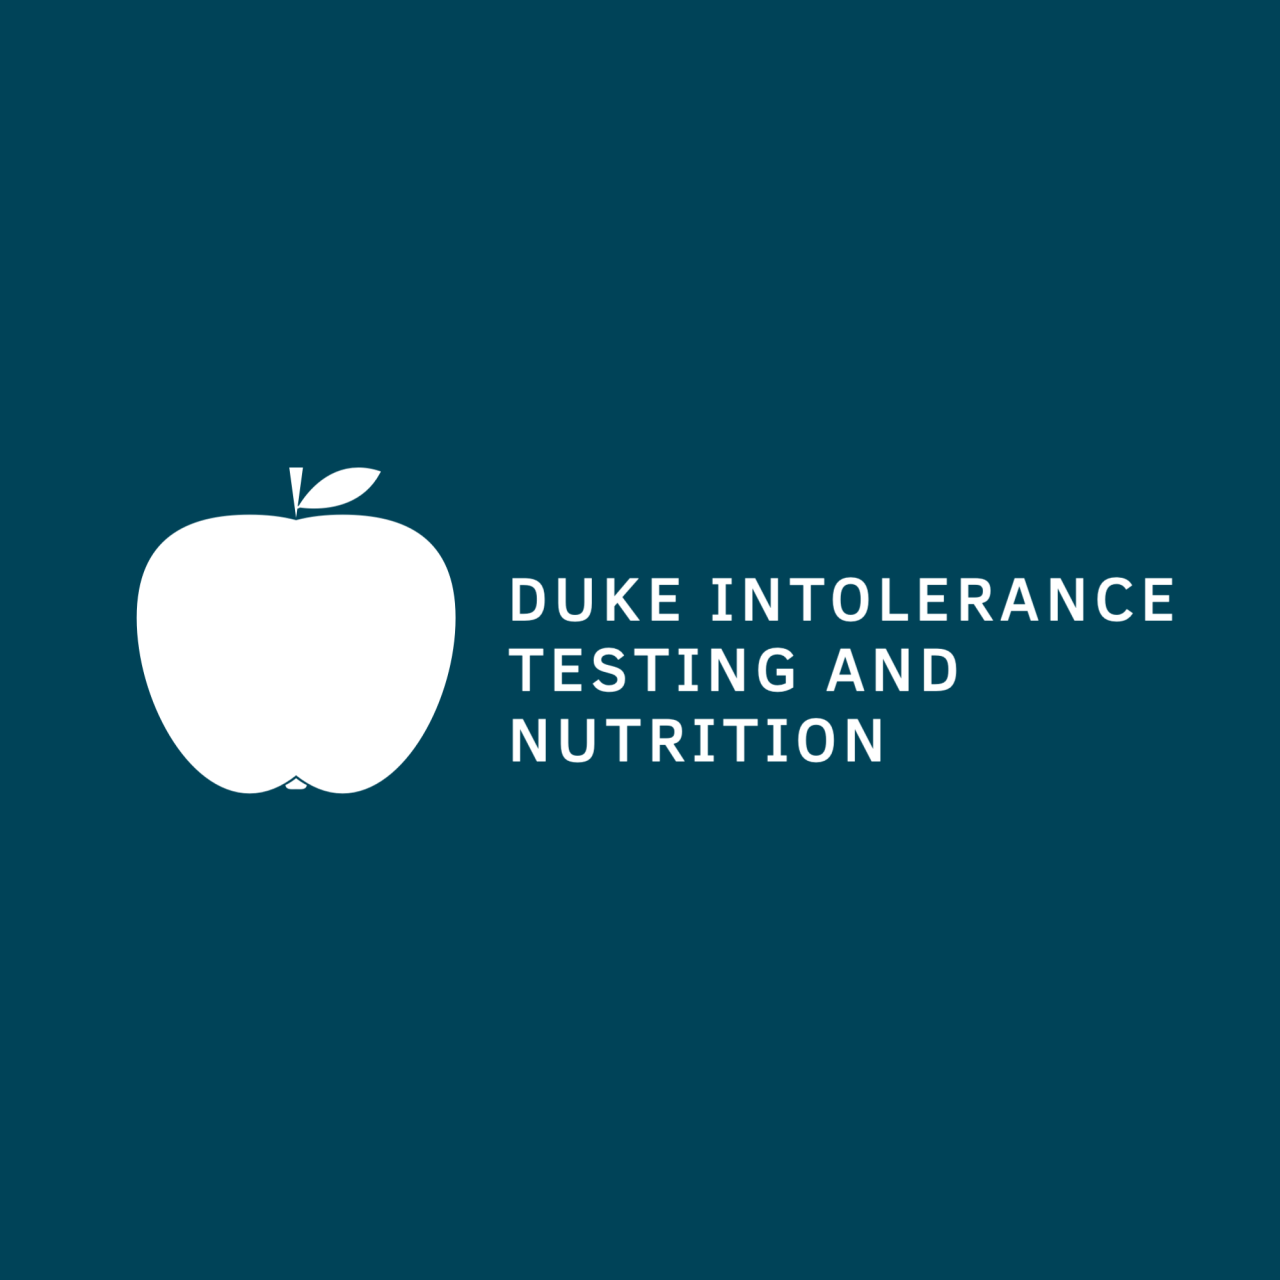 Duke Intolerance Testing and Nutrition's logo